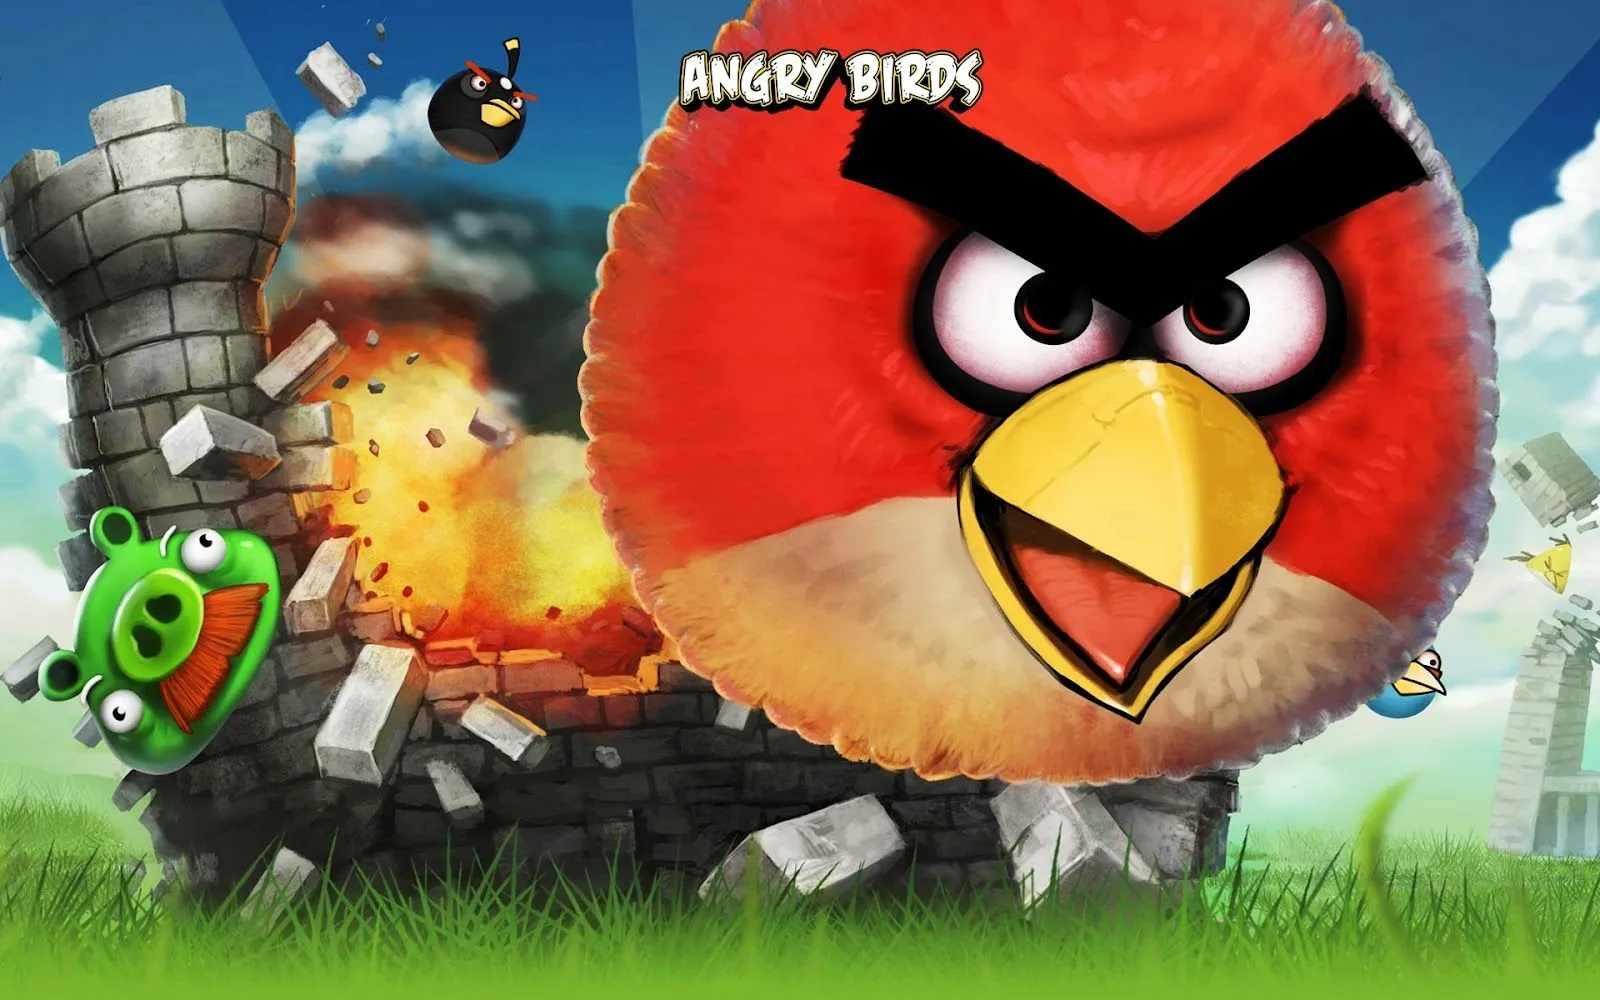 Cute & Girly: Wallpapers de Angry Birds para tu pc